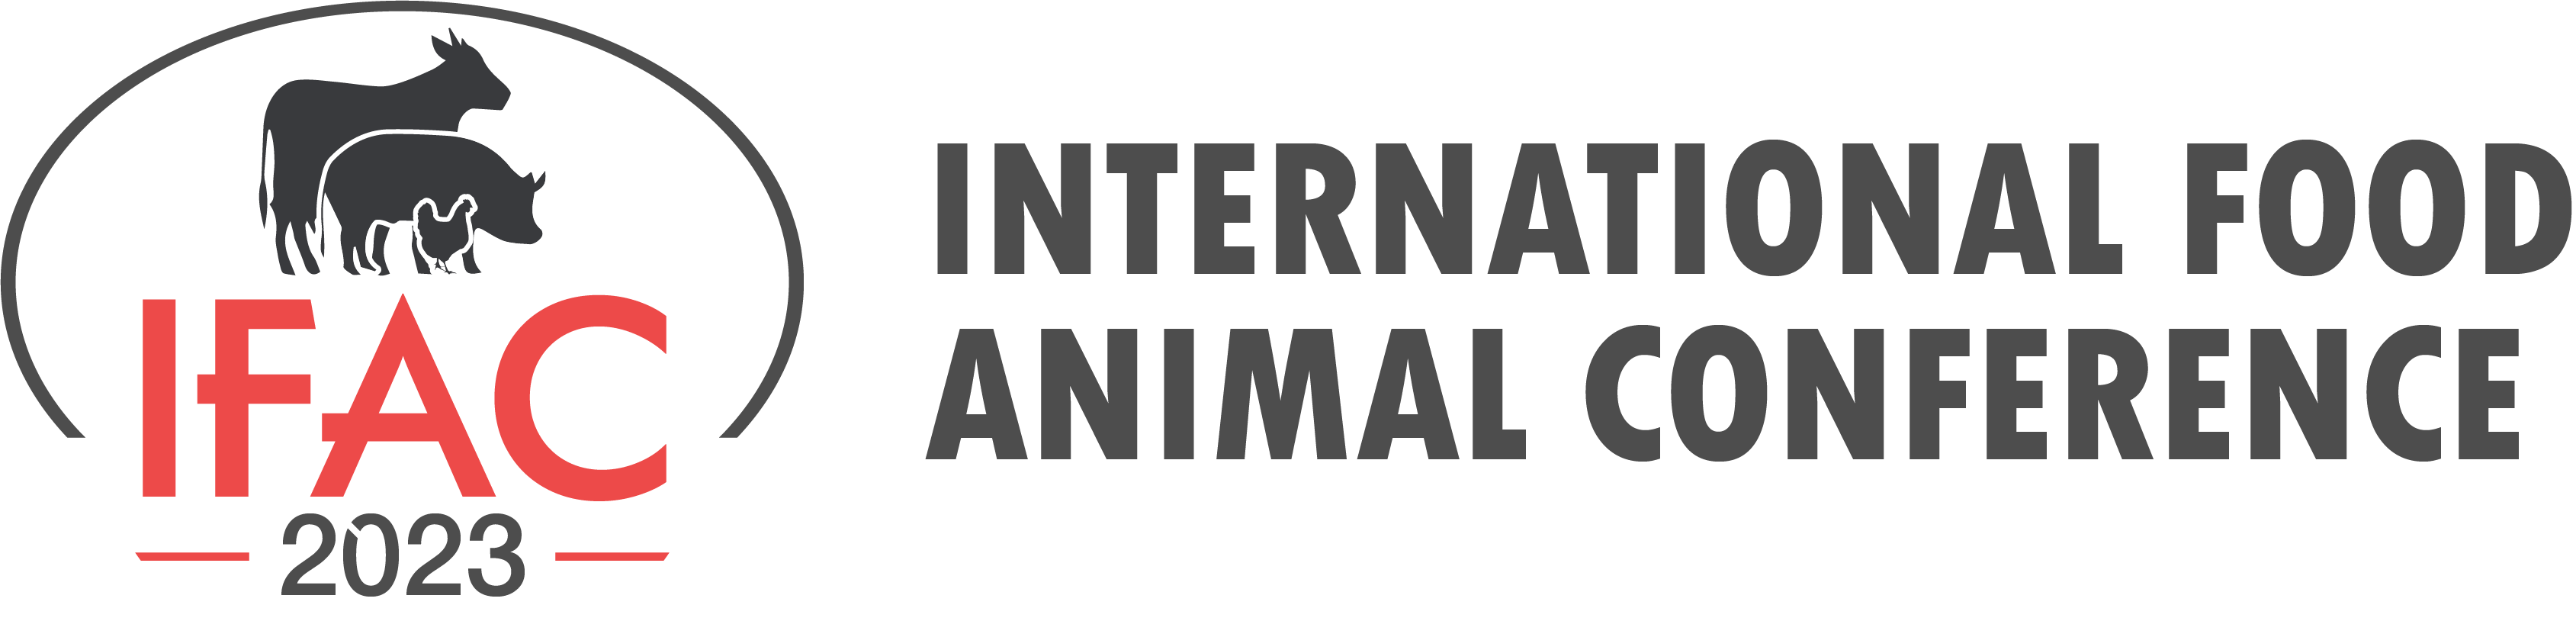 IFAC International Food Animal Conference